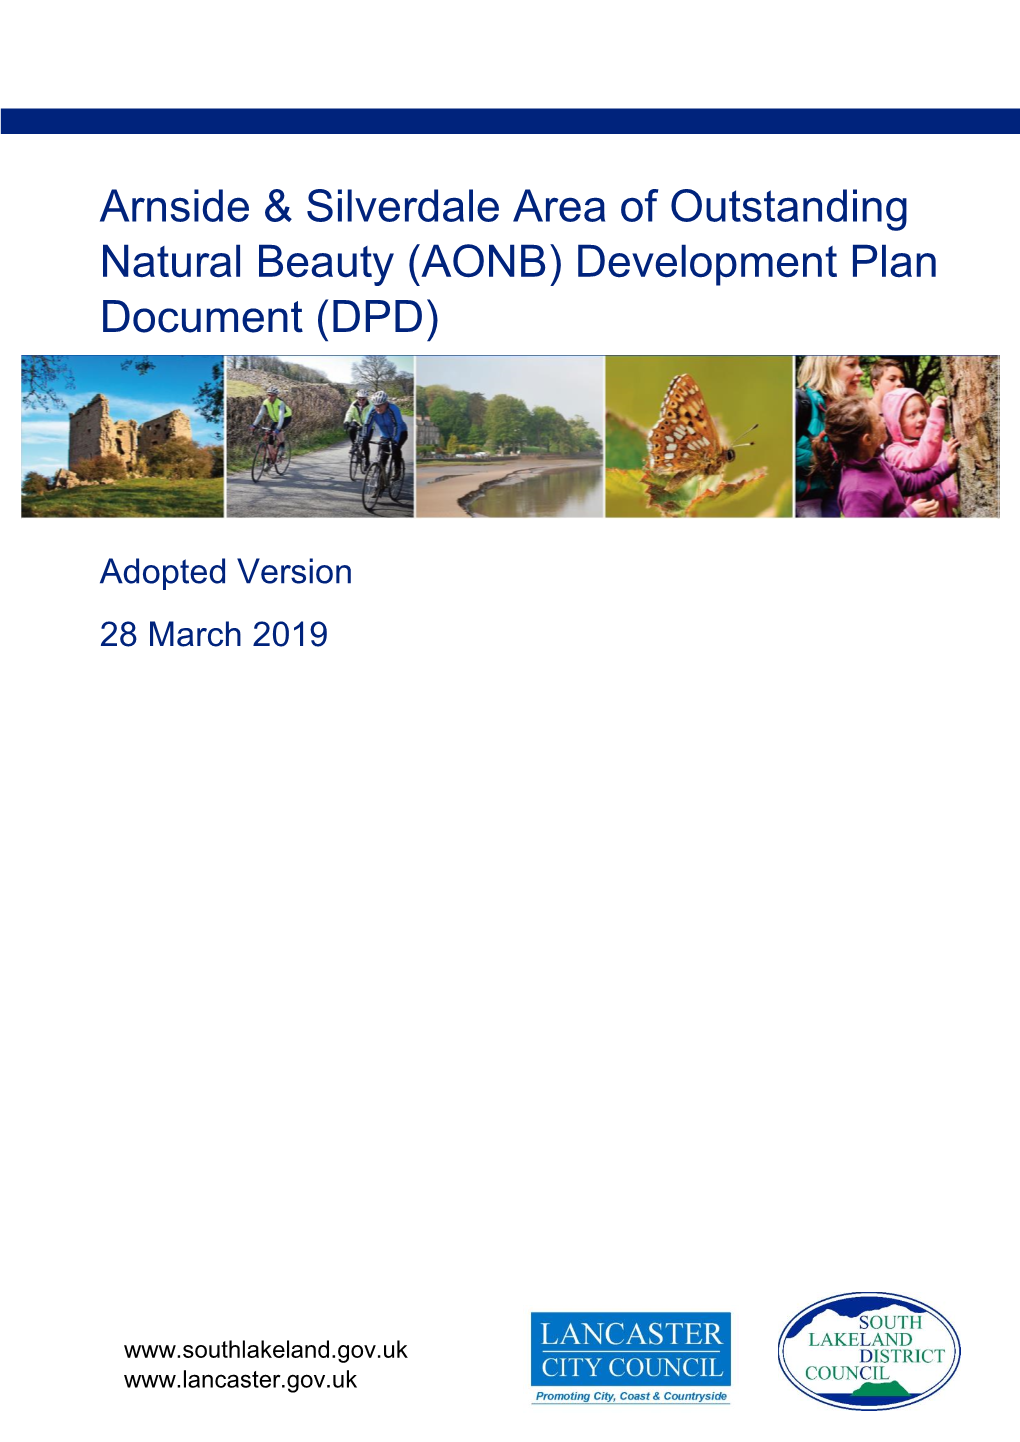 Arnside and Silverdale AONB Development Plan Document (DPD)